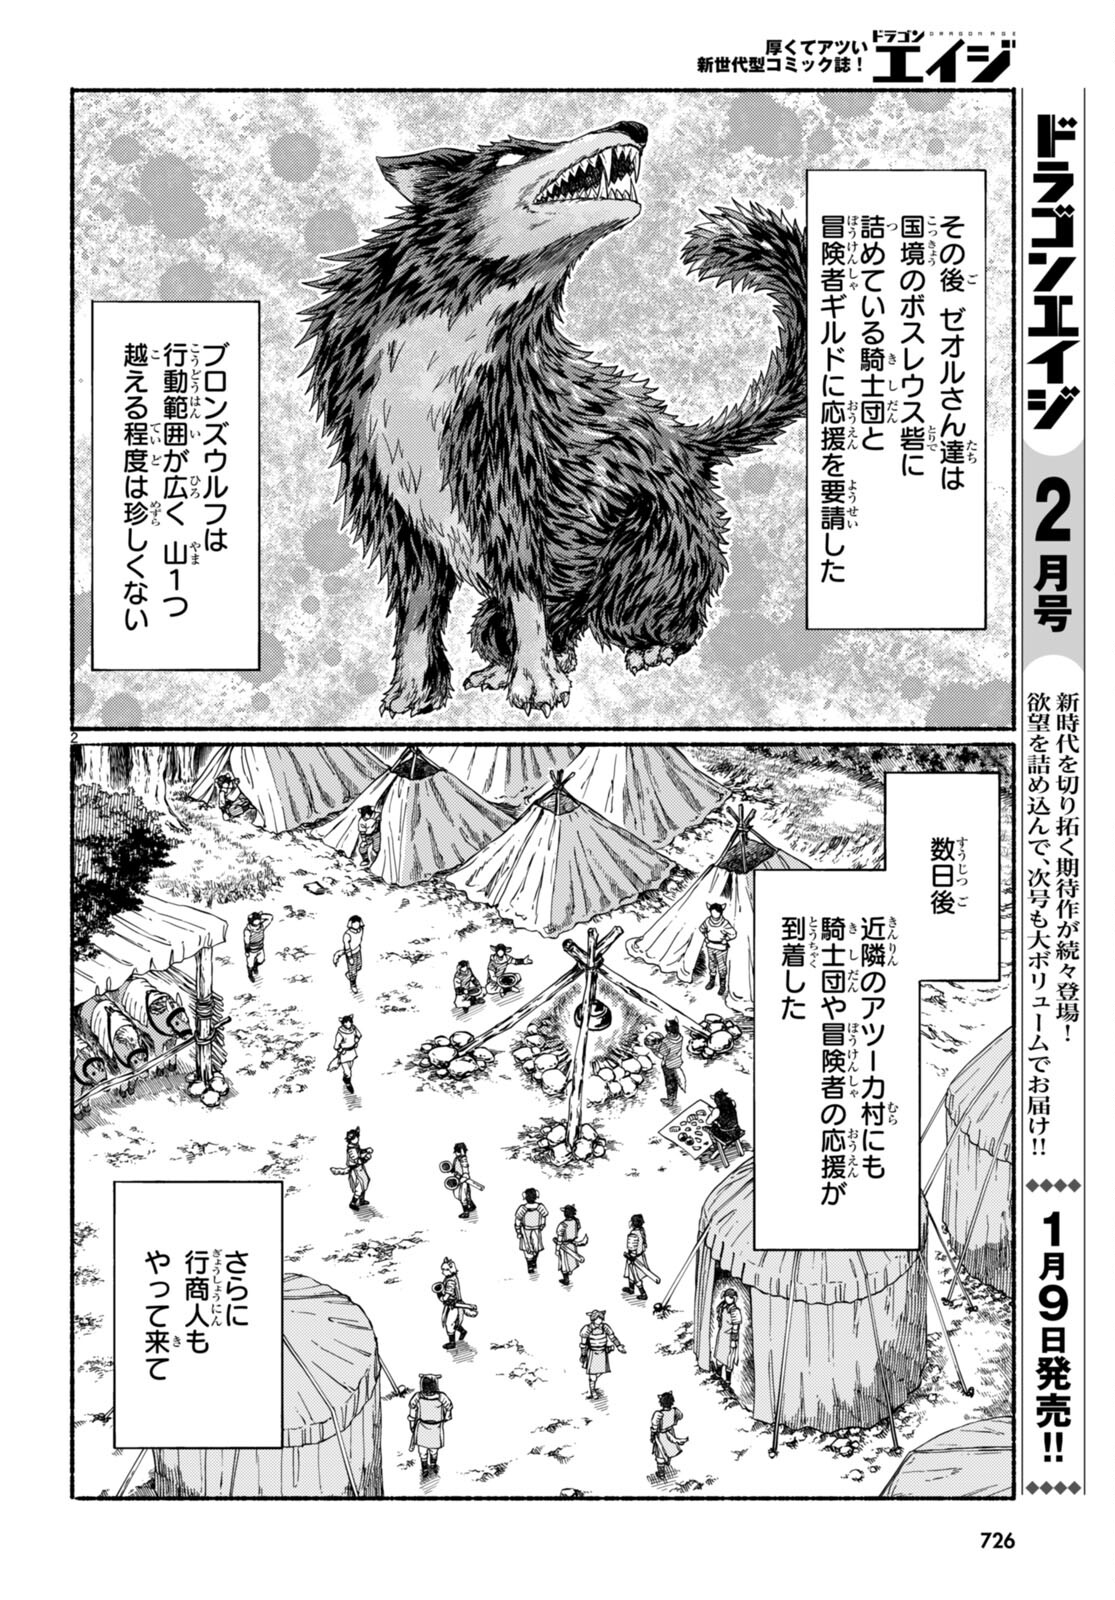 Kuroneko Nyango no Bouken - Chapter 12 - Page 2